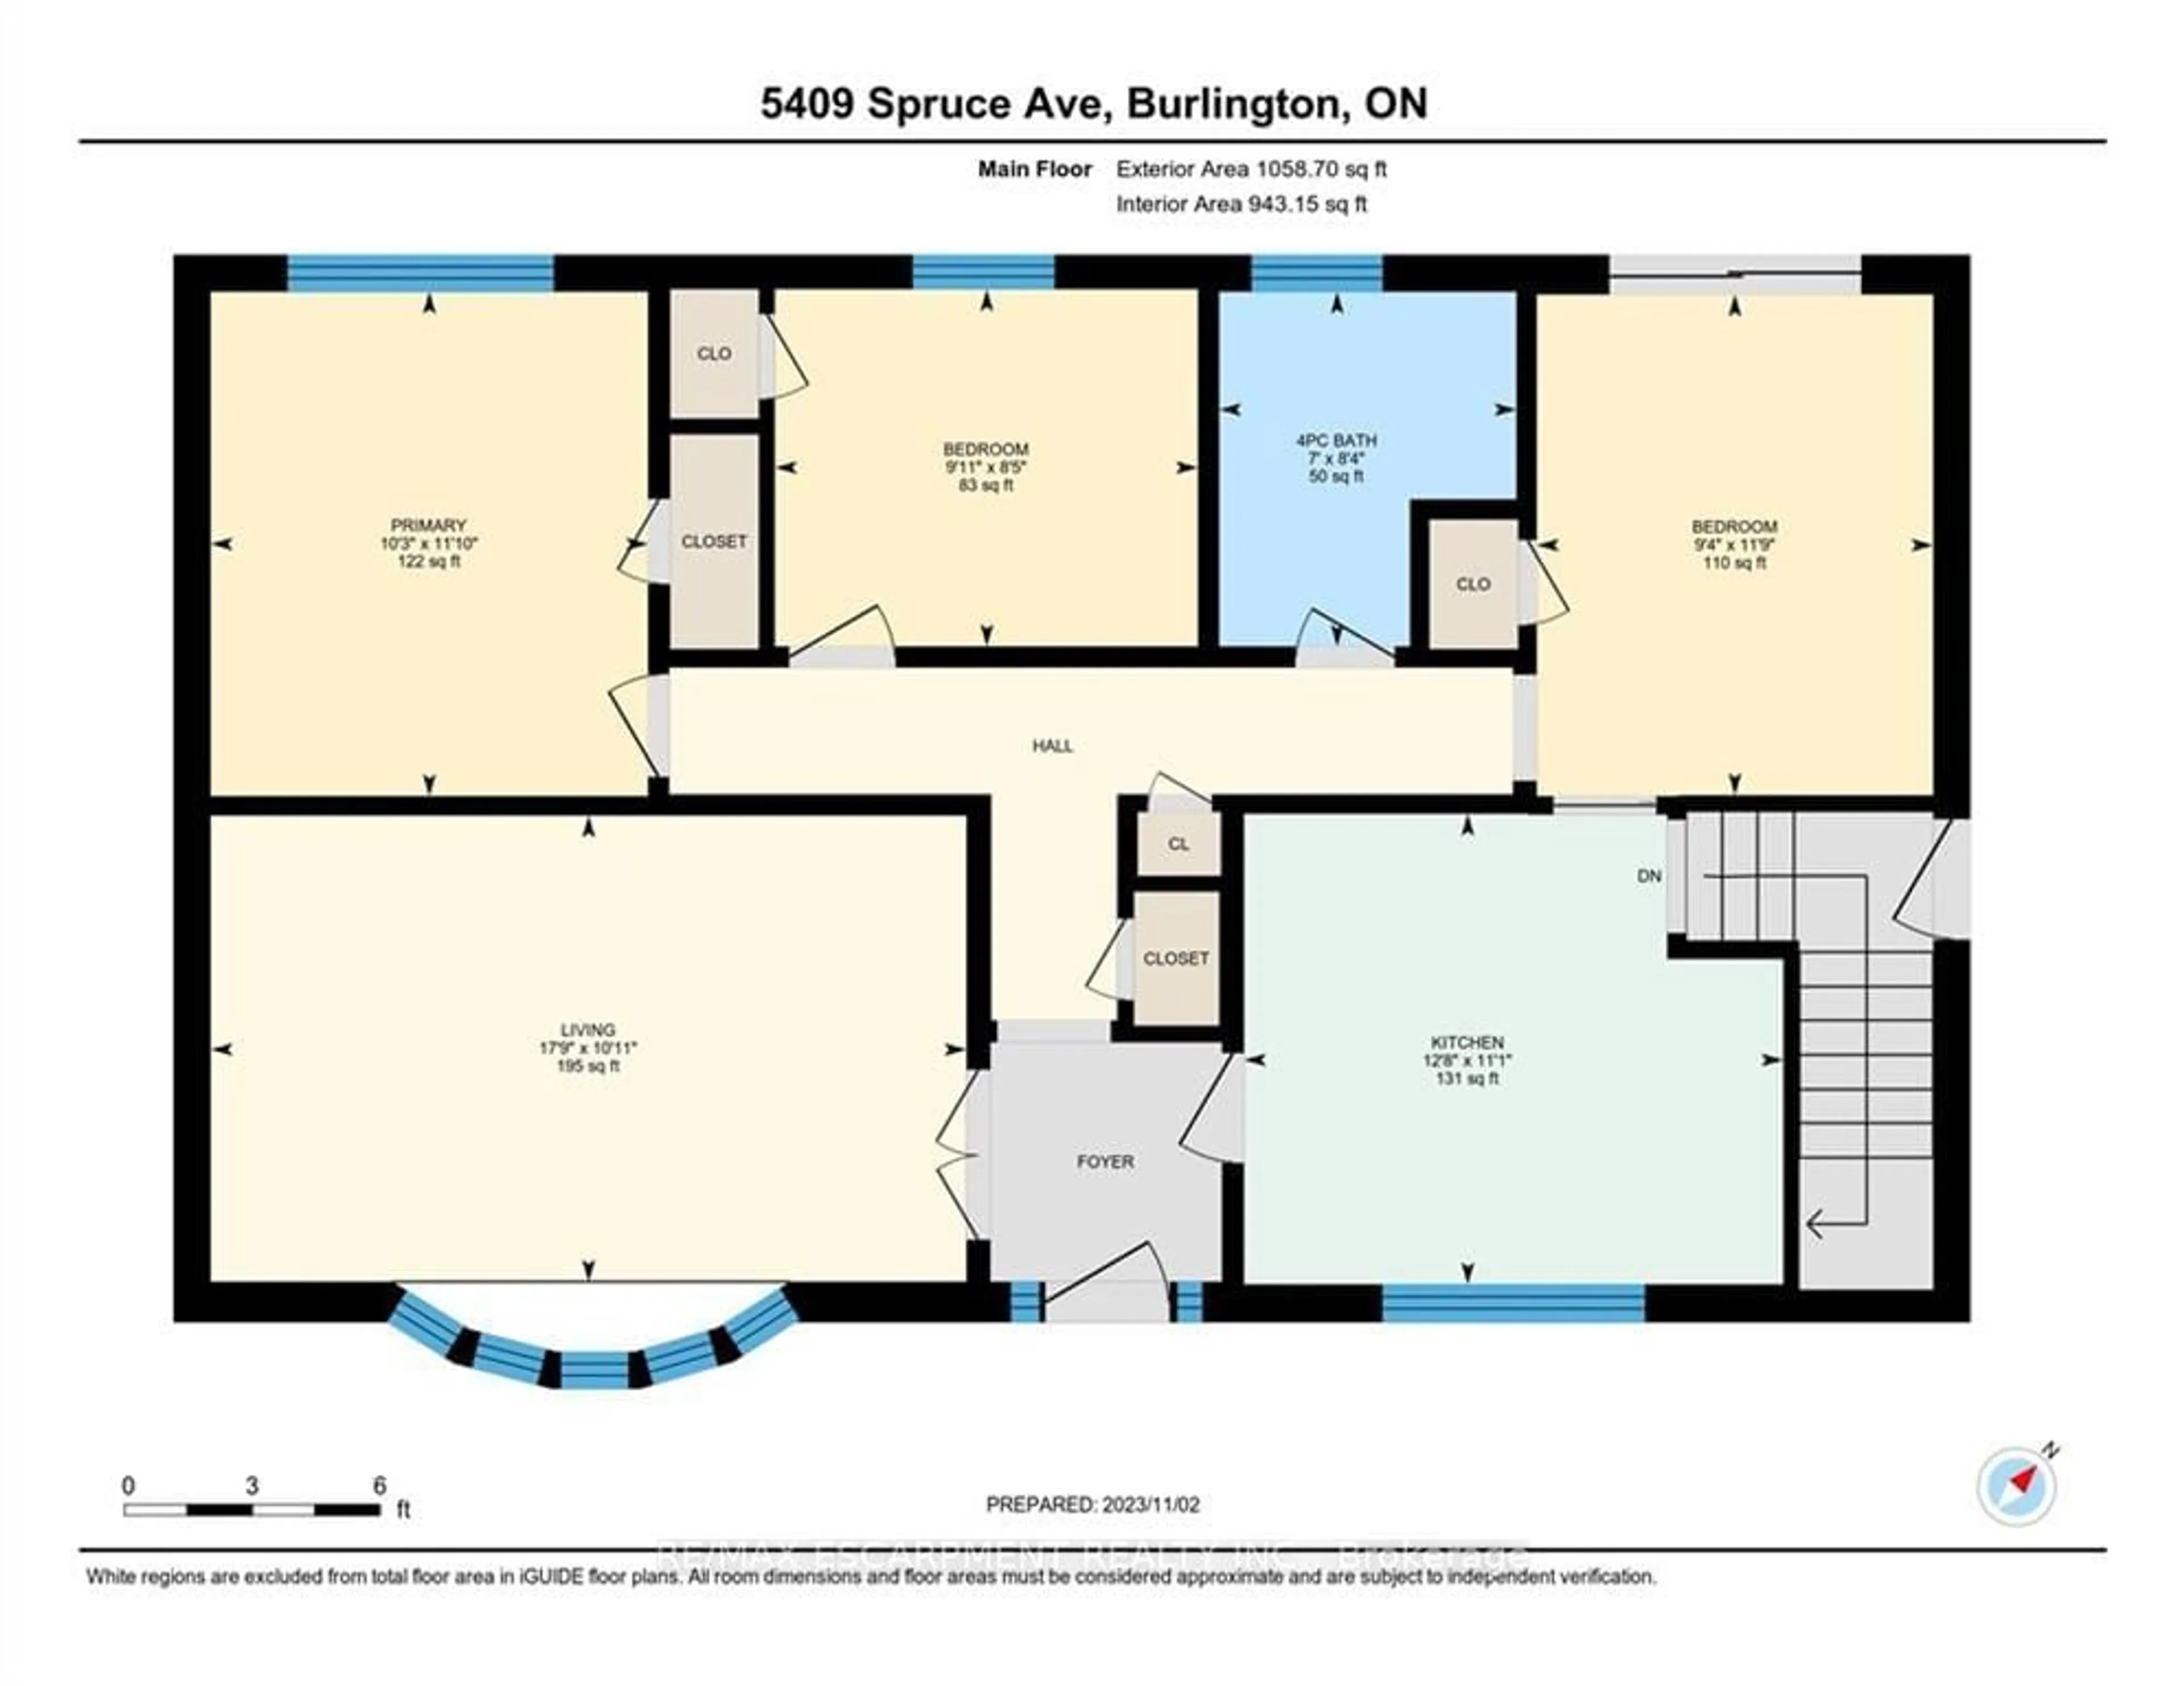 Floor plan for 5409 Spruce Ave, Burlington Ontario L7L 1N8